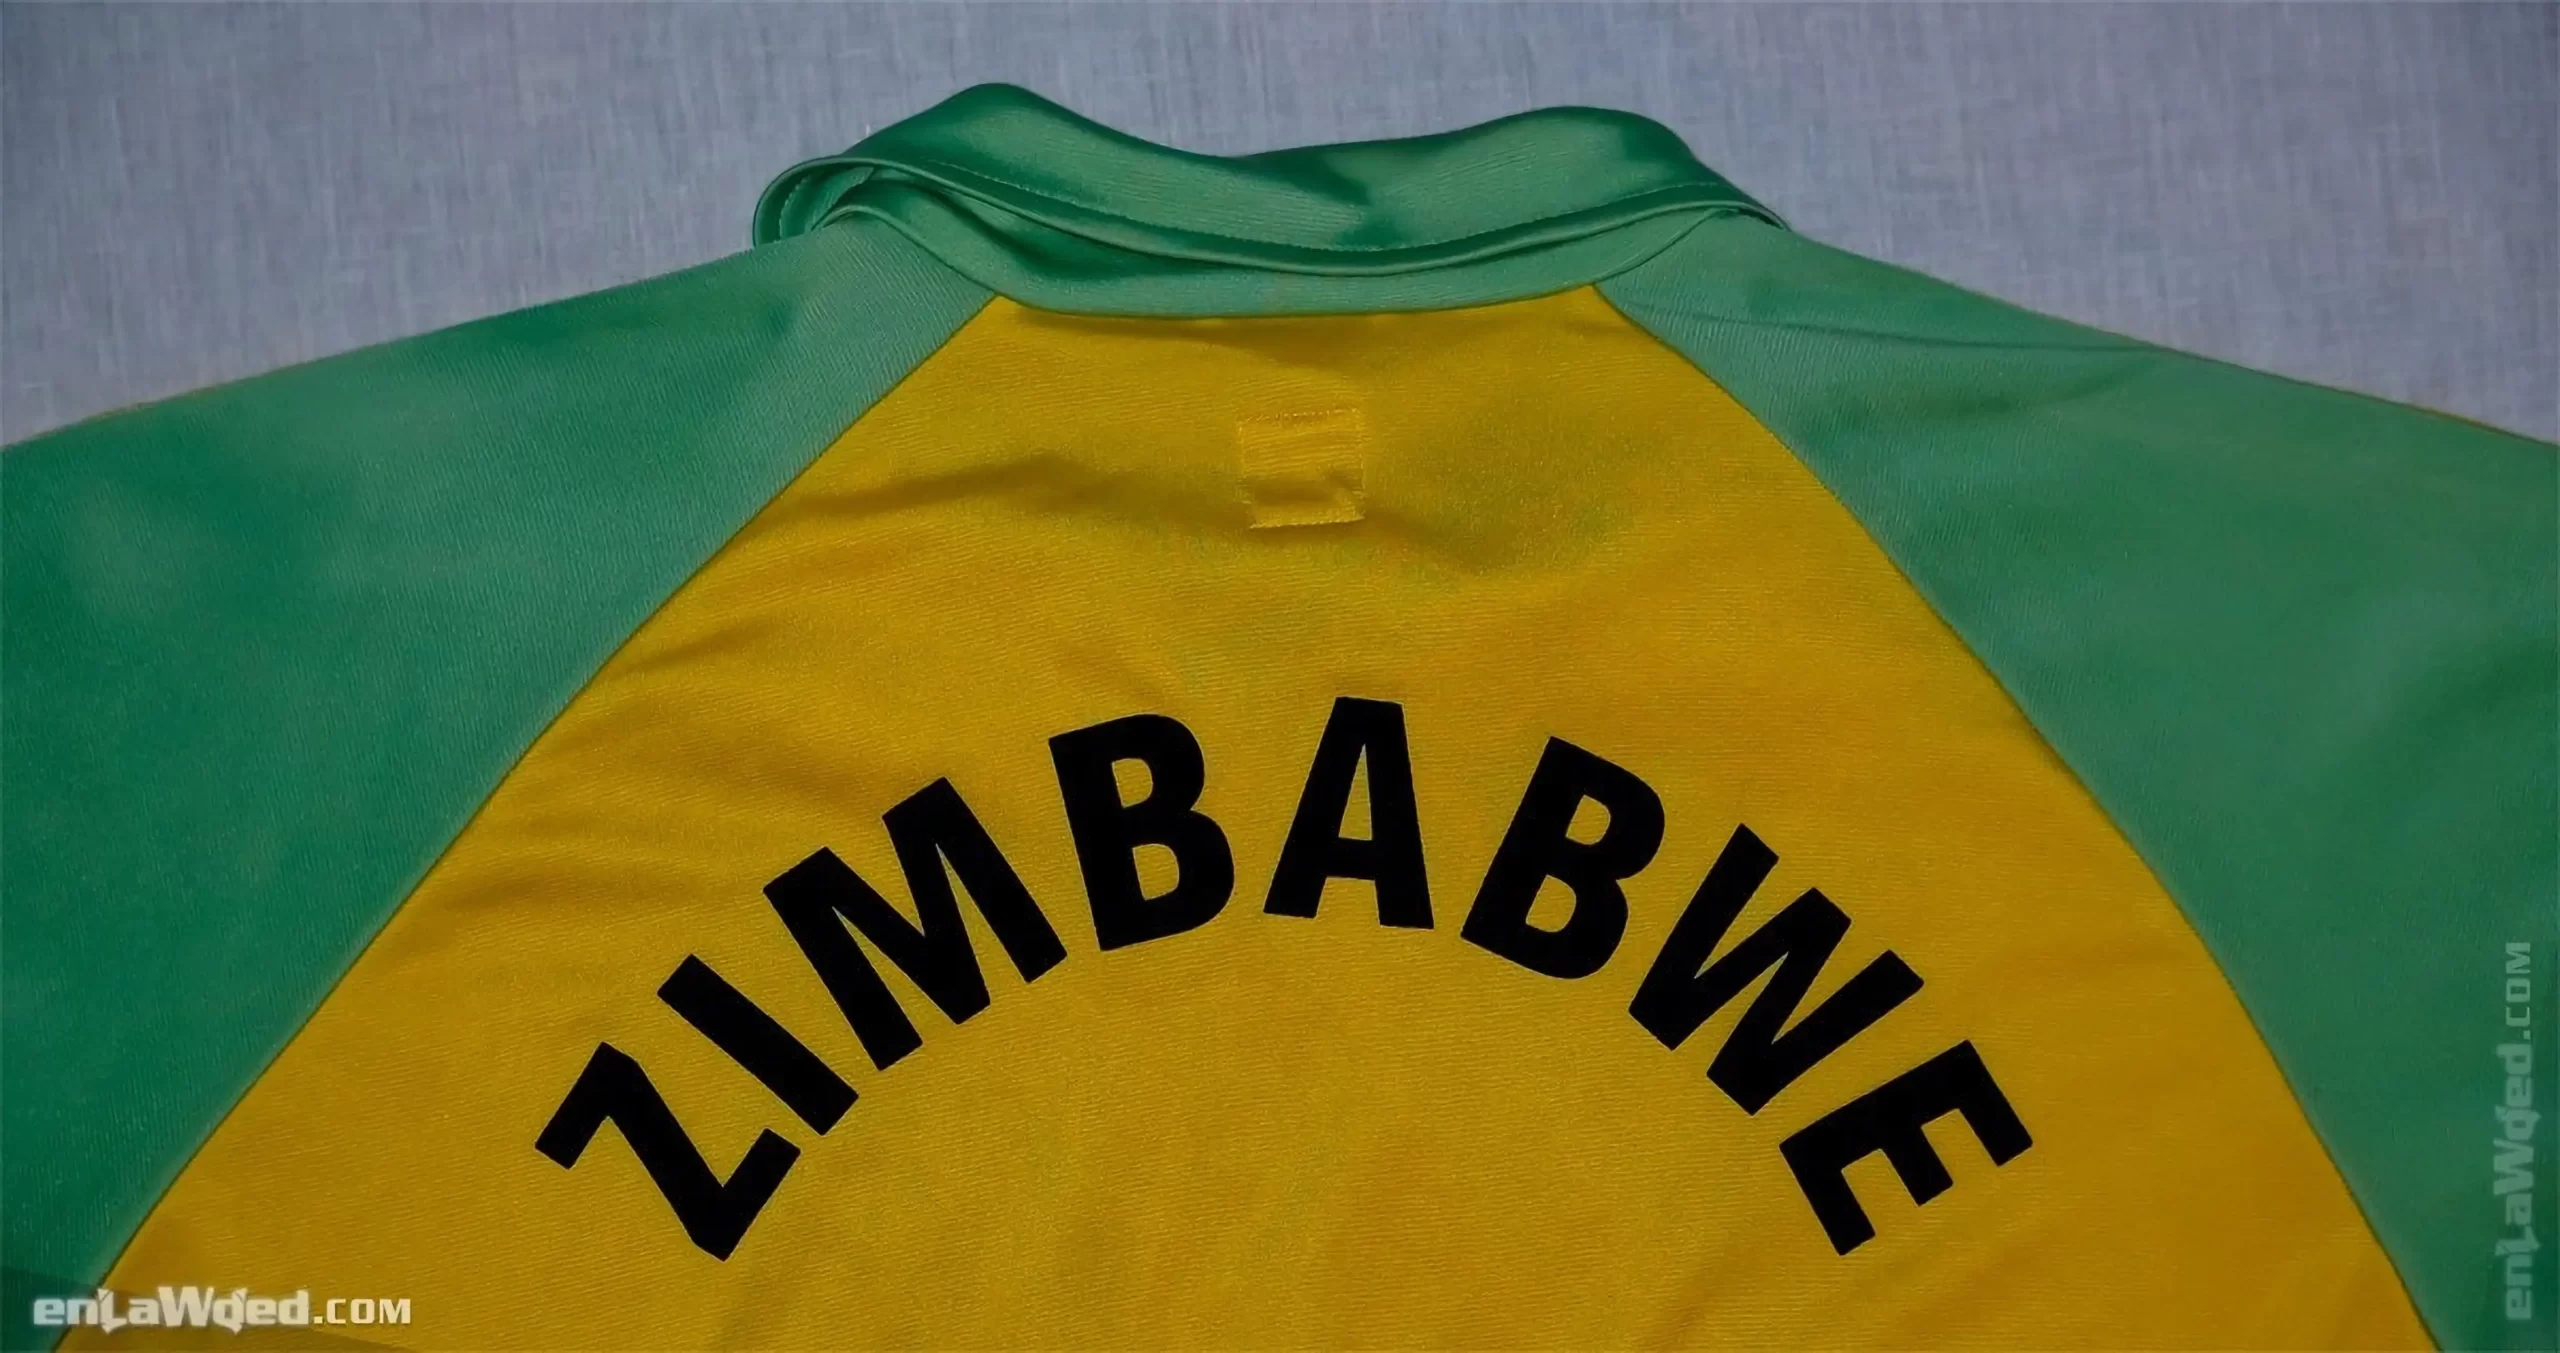 Men’s 2003 Zimbabwe Track Top by Adidas: Indulgence (EnLawded.com file #lmcgzvkayyjgslpw7np)